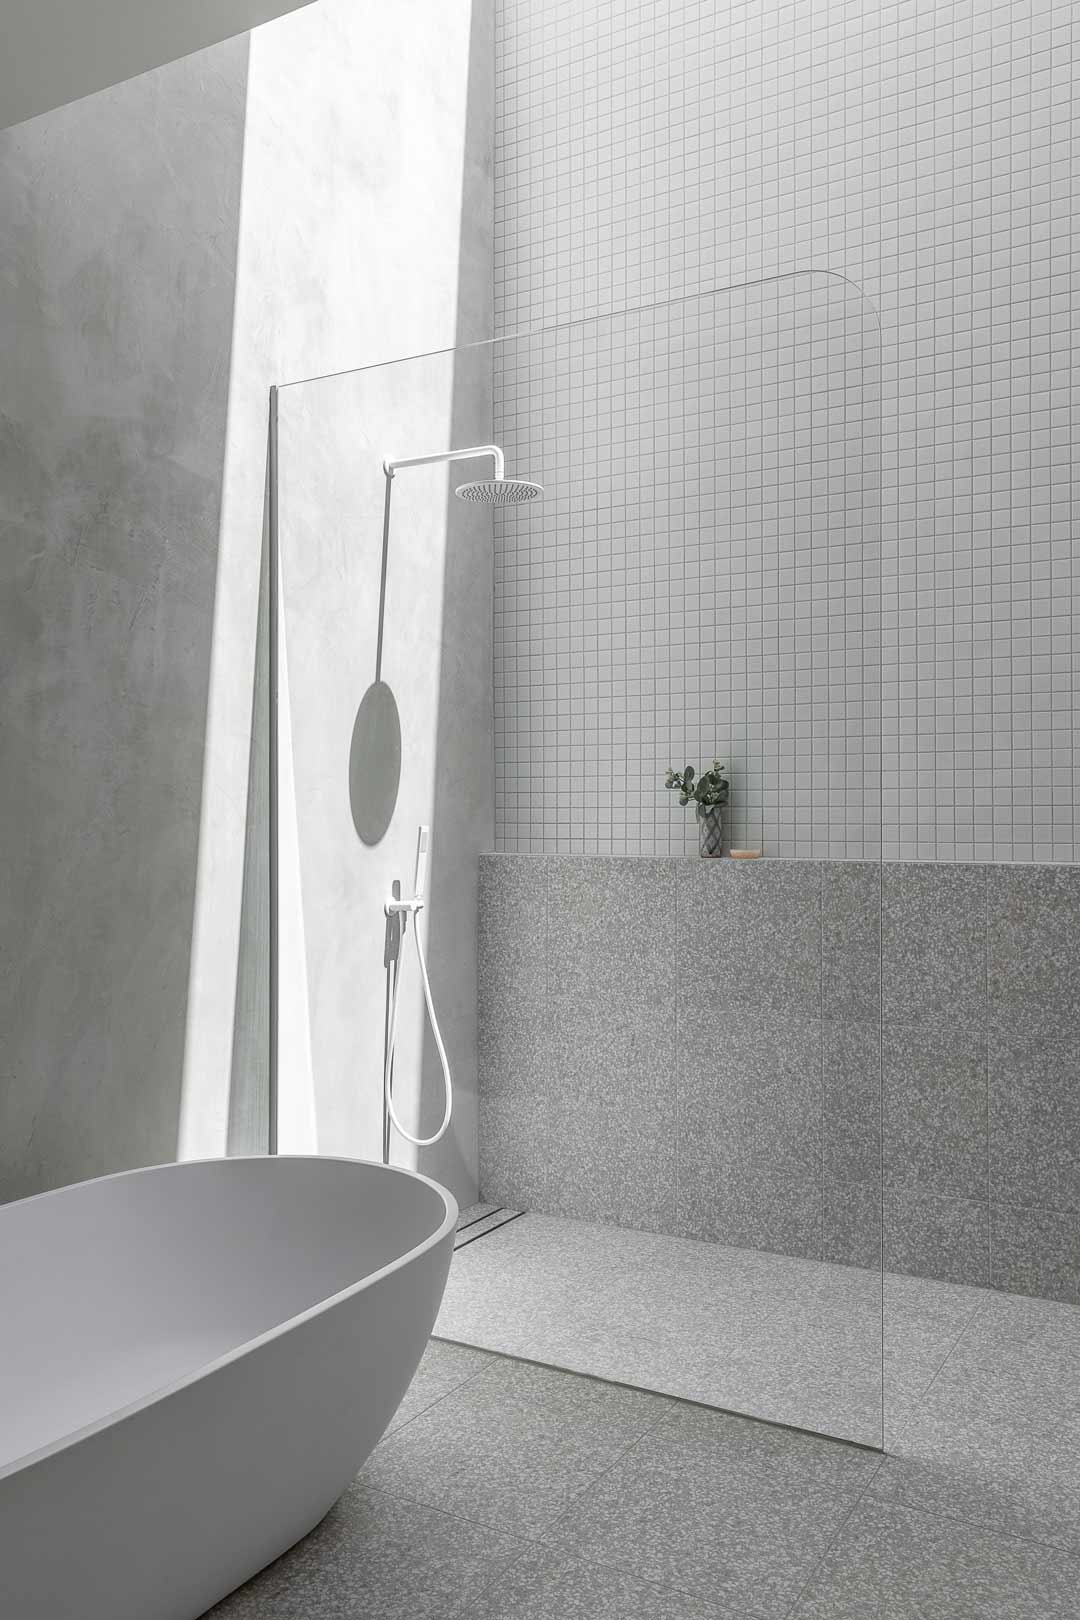 A crisp white bathroom creates a spa like experience